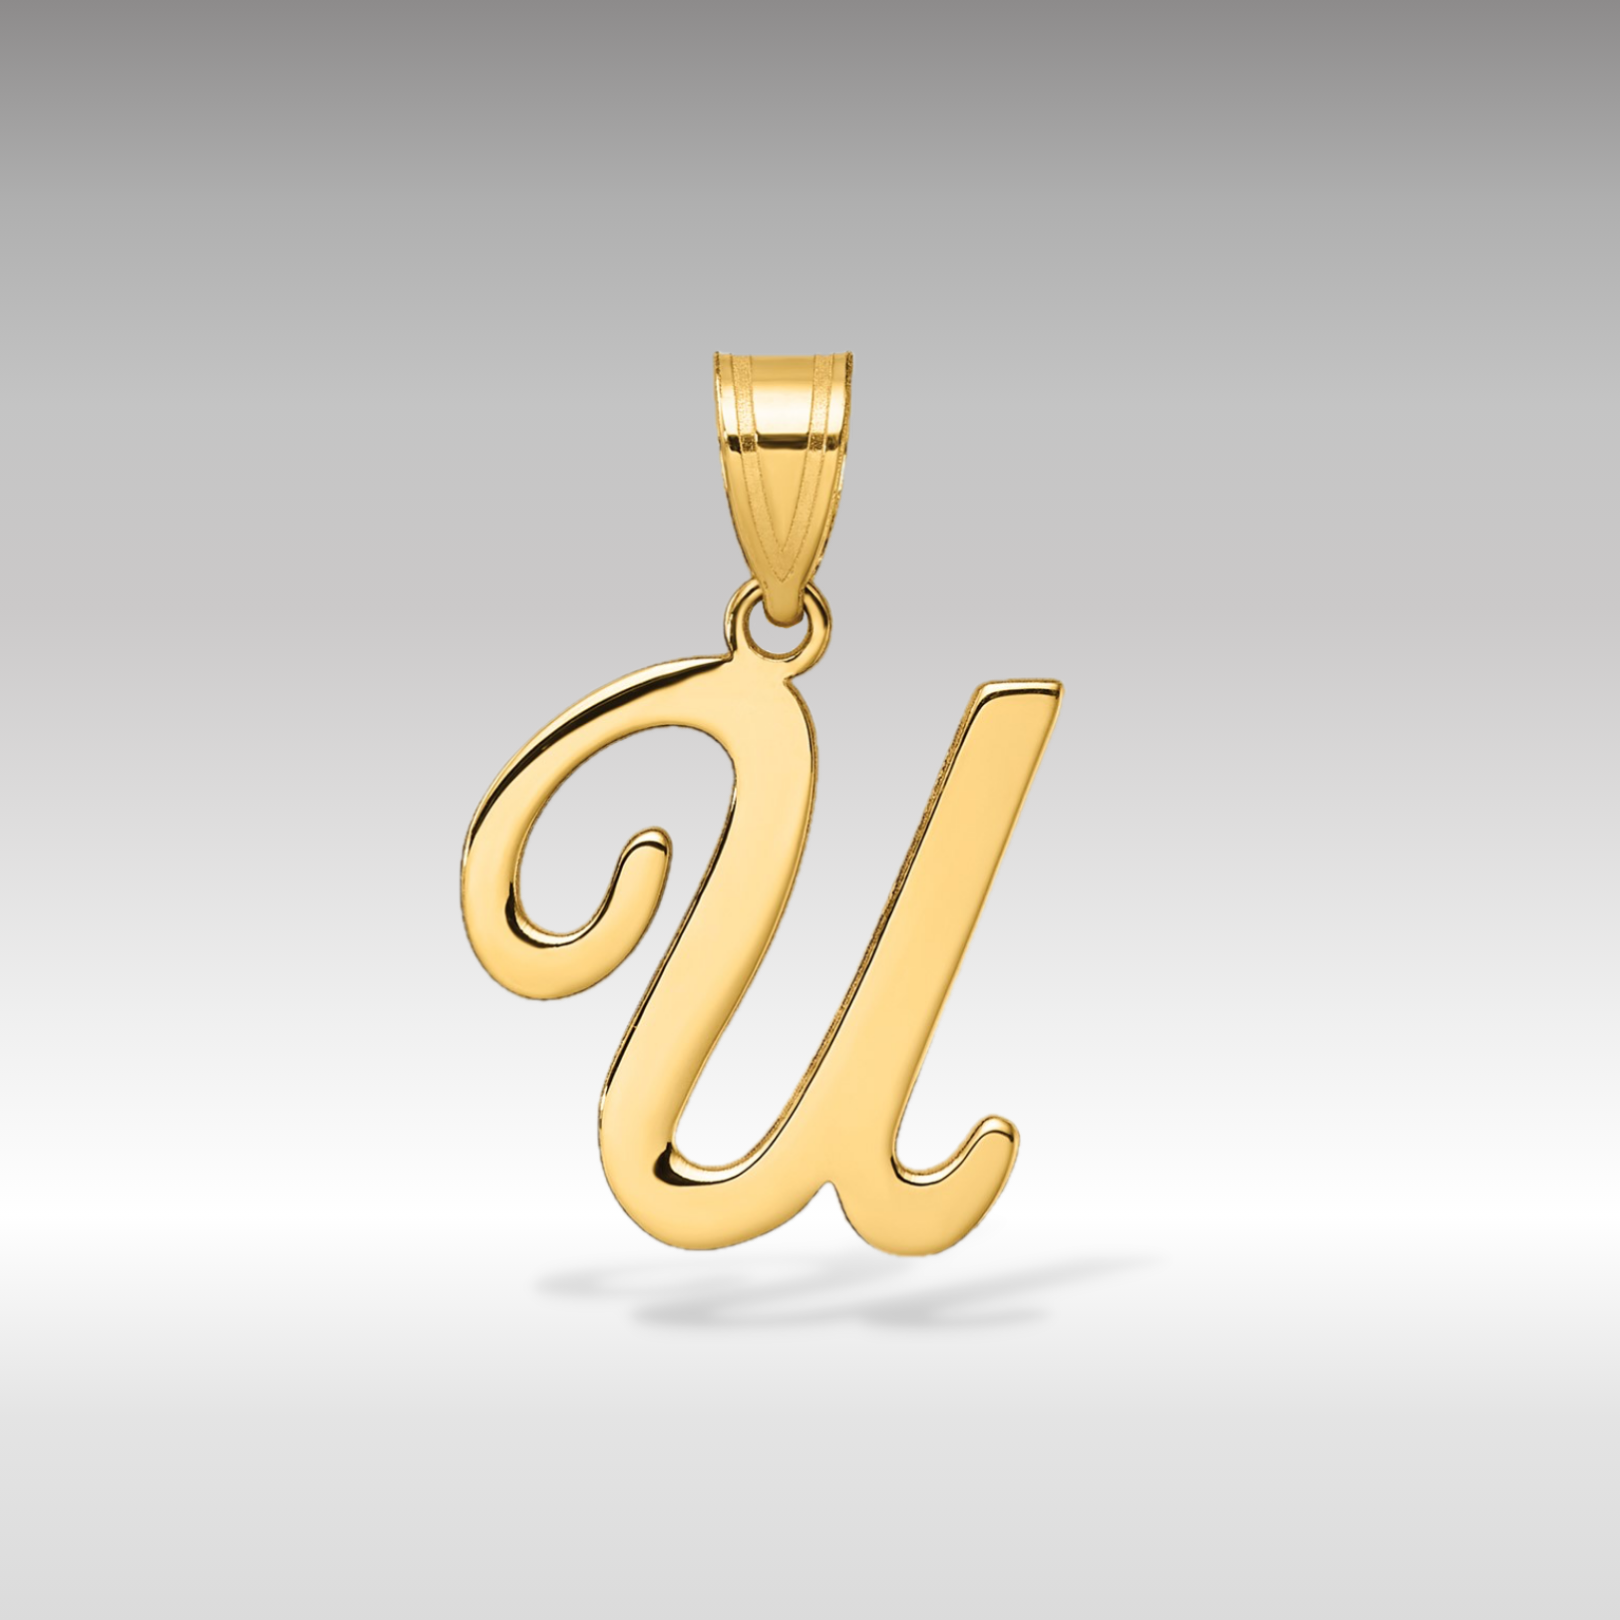 14K Gold Large Letter "U" Script Initial Pendant - Charlie & Co. Jewelry